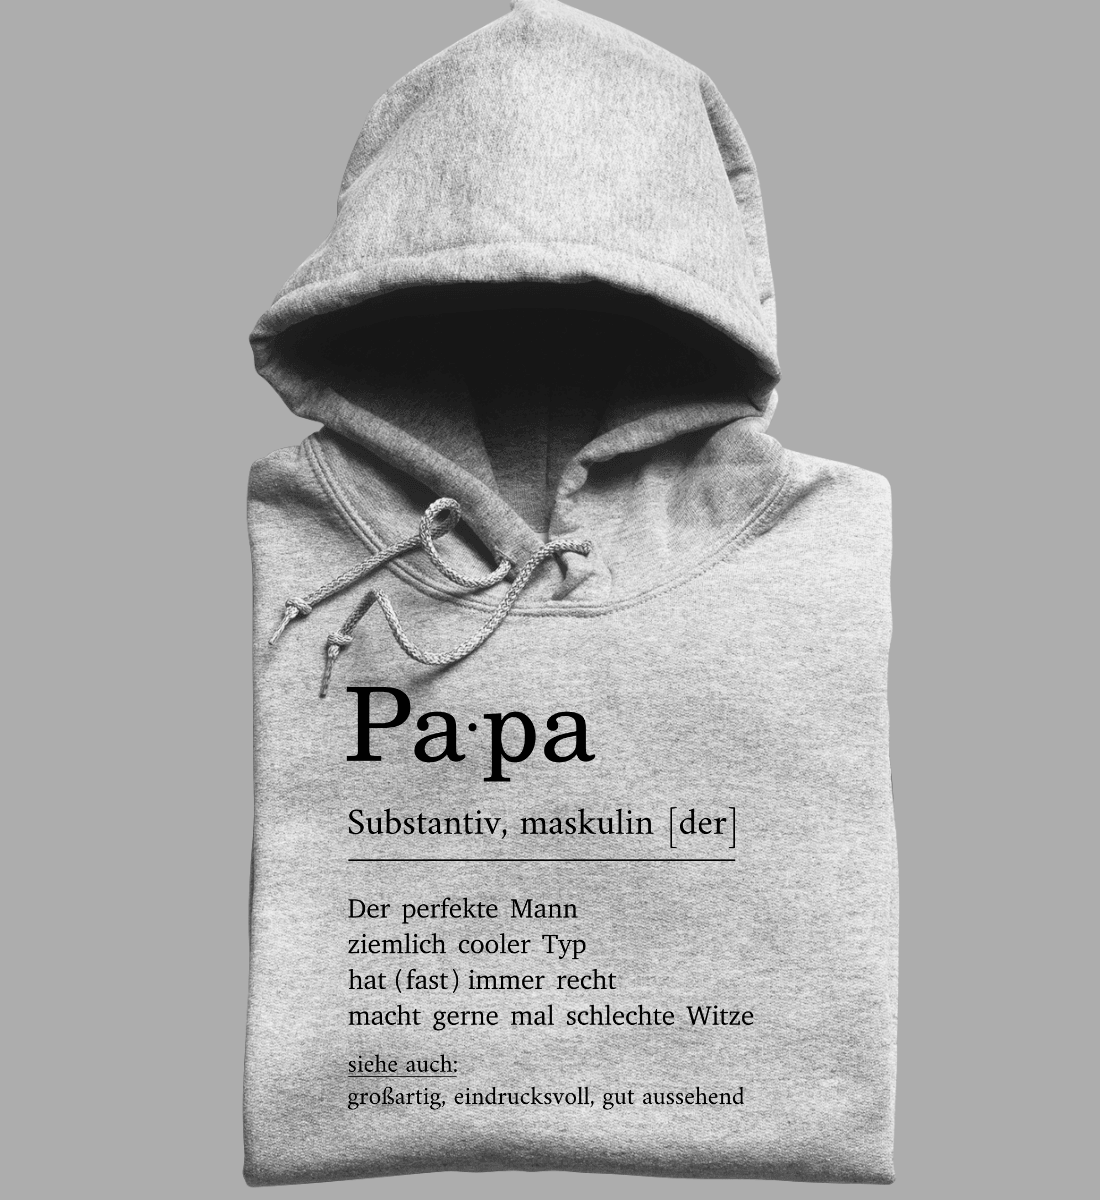 Papa Definition - Premium Organic Hoodie - Papasache